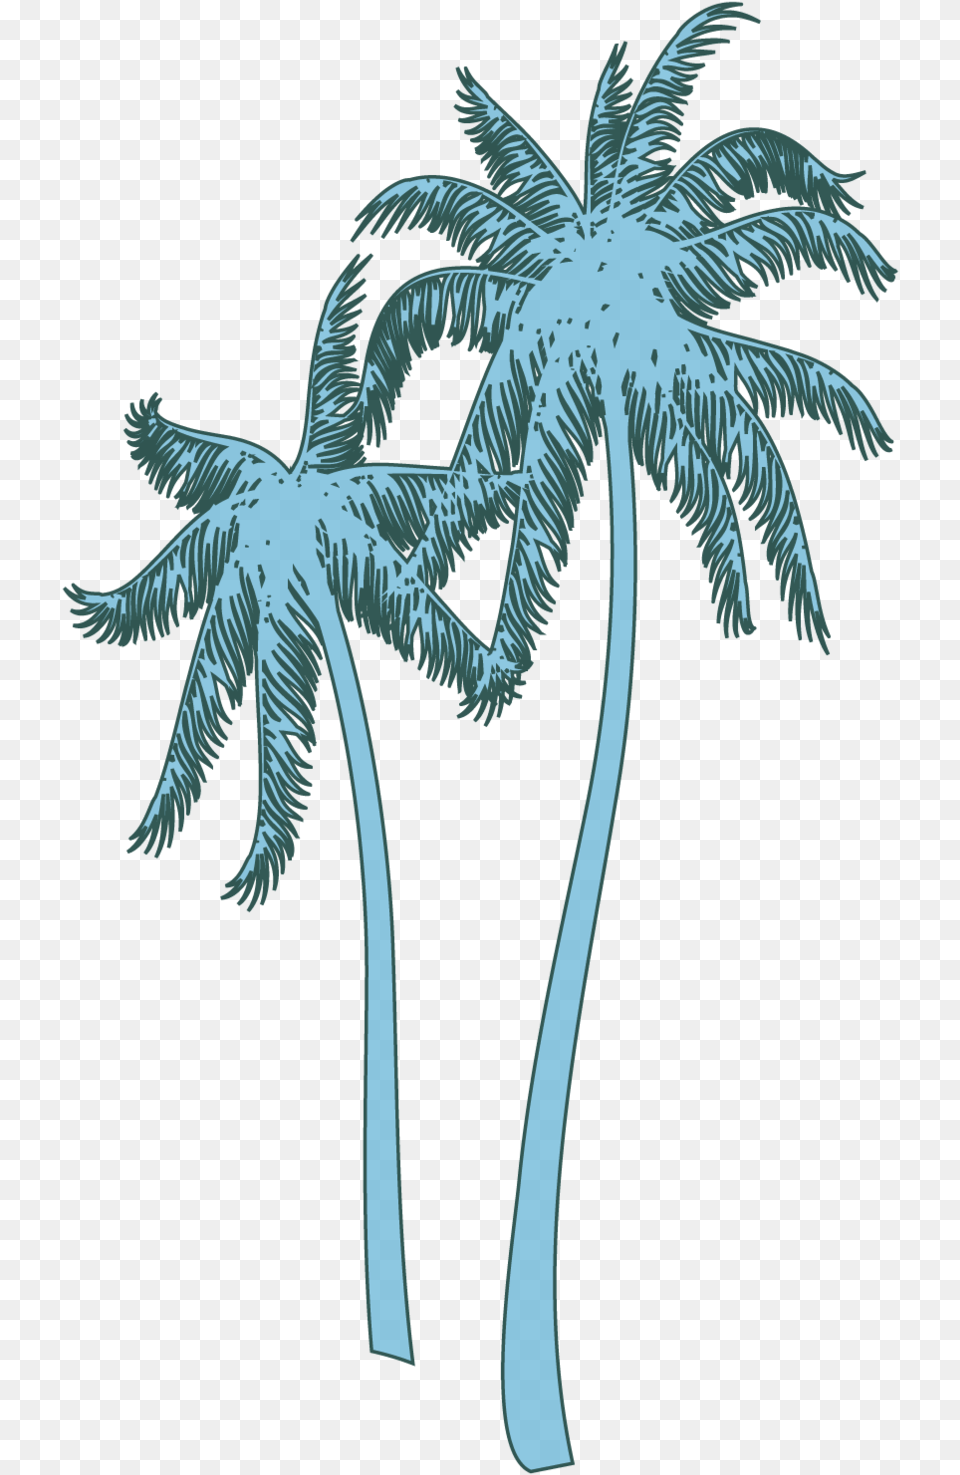 Coconut Tree Download Roystonea, Palm Tree, Plant, Animal, Bird Png Image